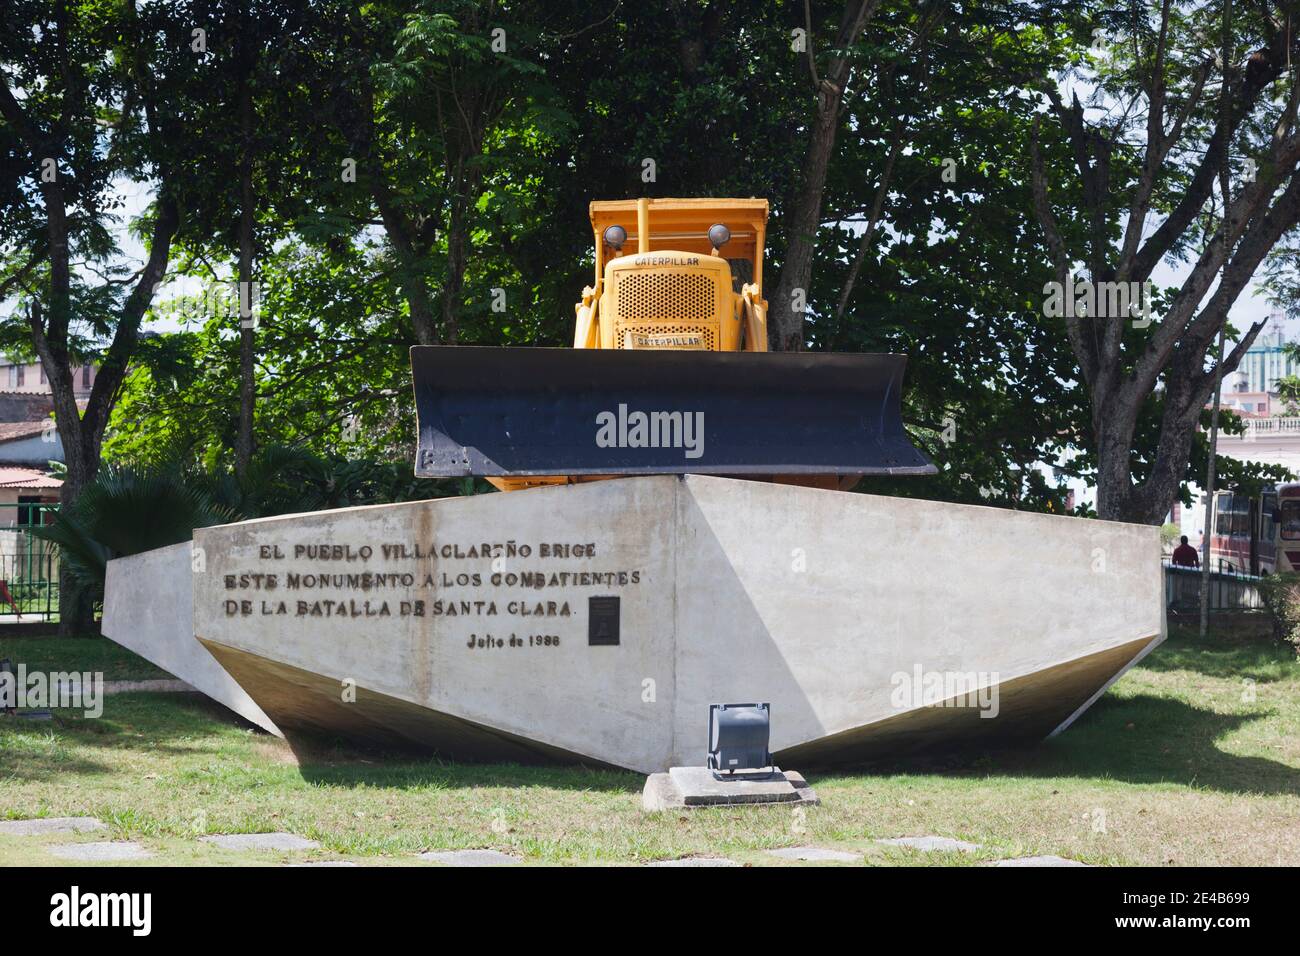 Bulldozer that the guerrillas used to cut the railway line is on a pedestal at the Tren Blindado, Santa Clara, Cuba Stock Photo